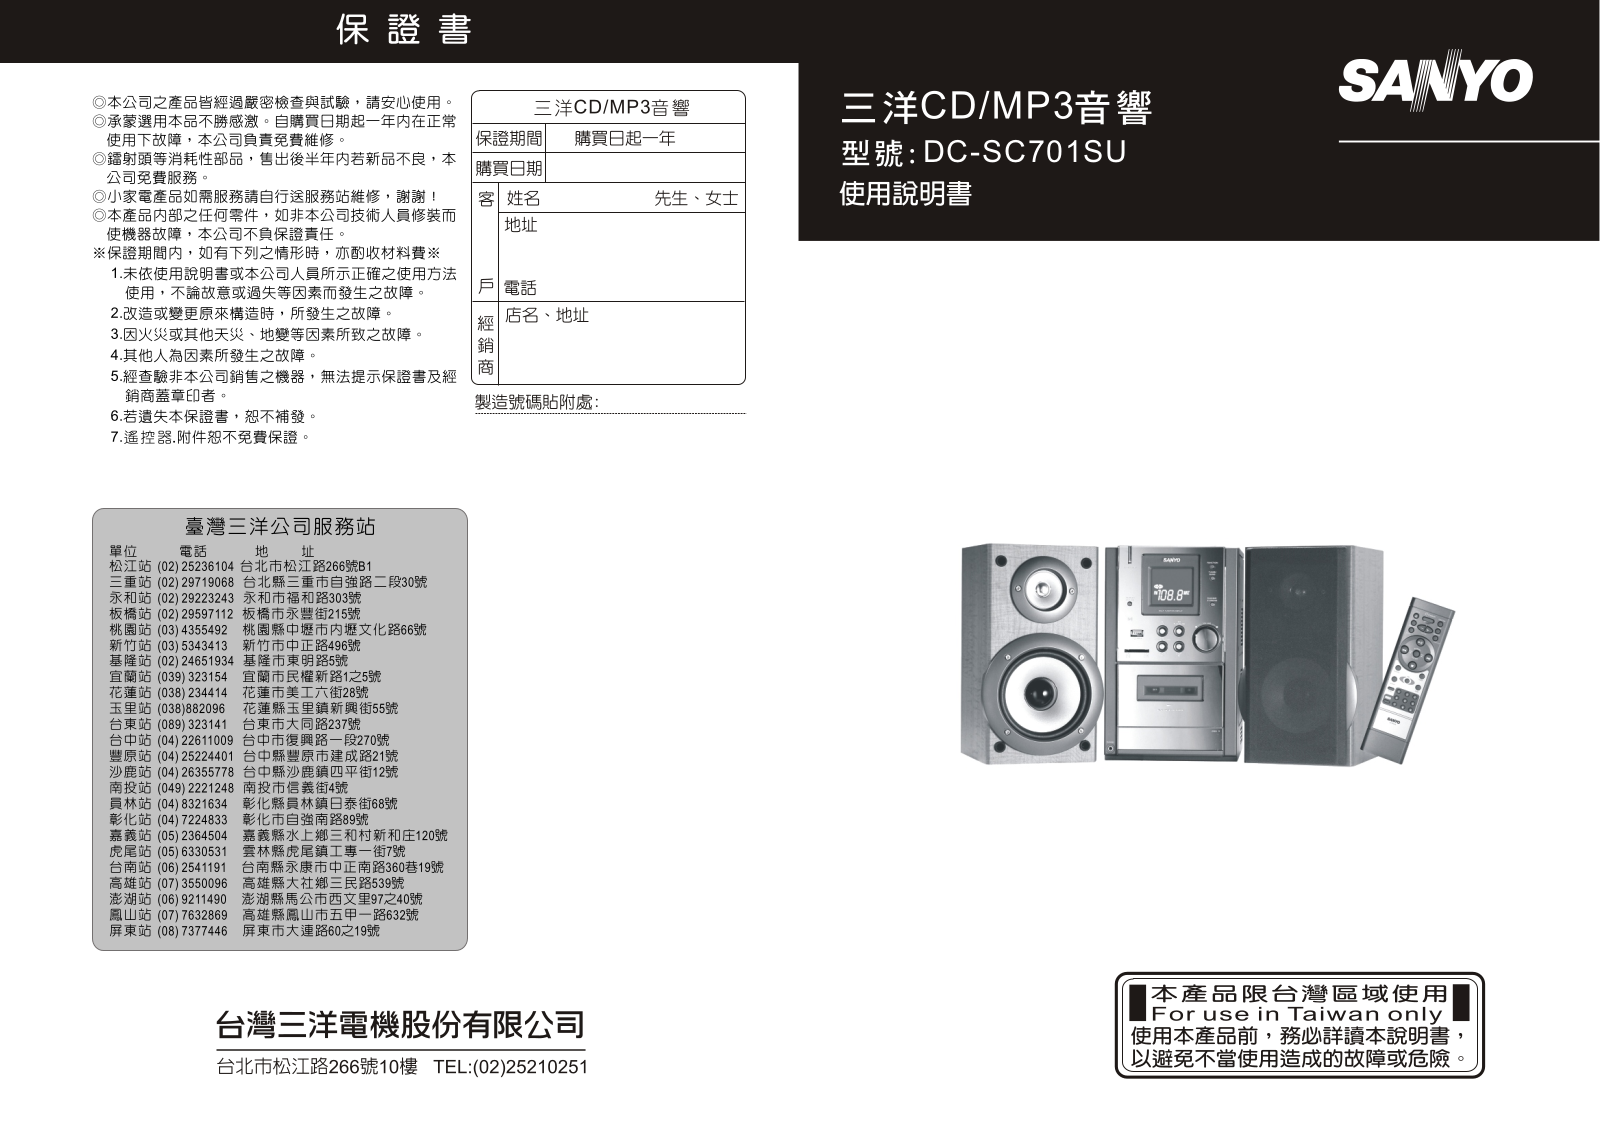 SANYO DC-SC701SU User Manual